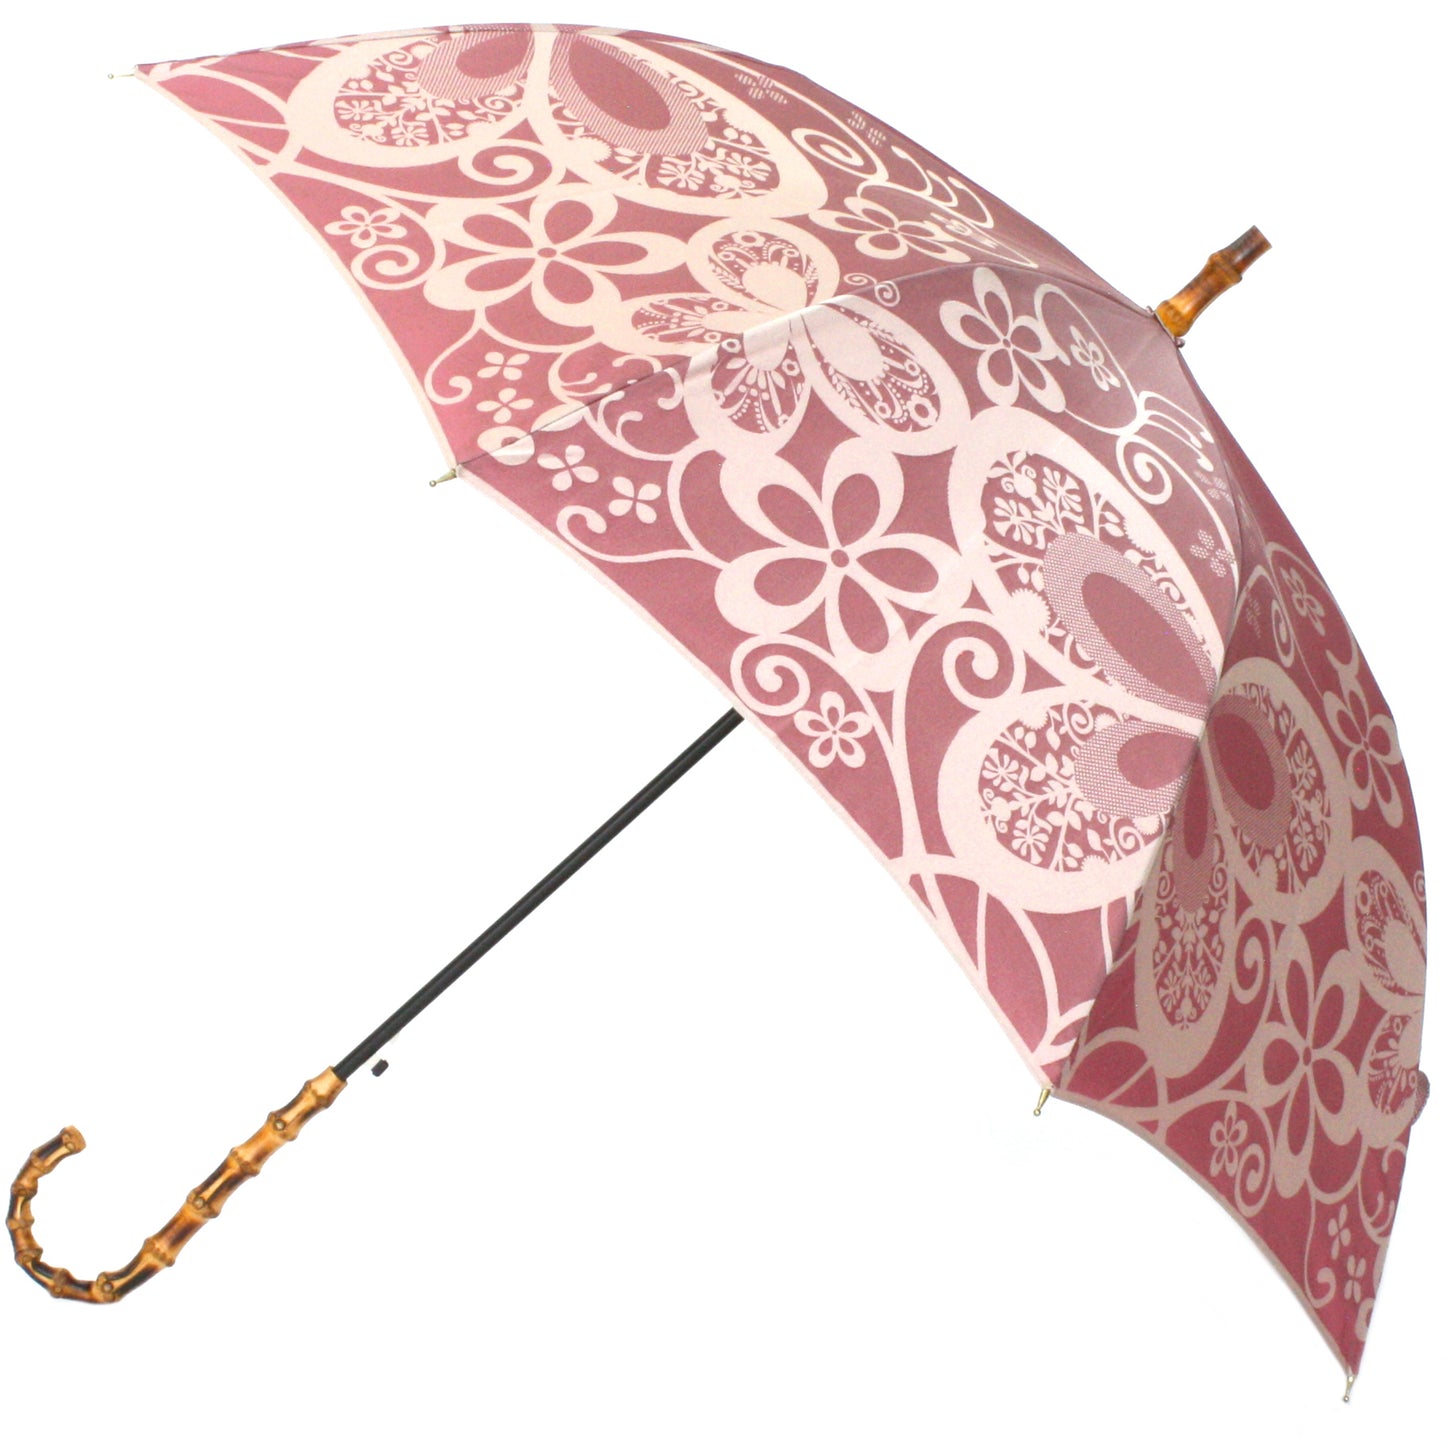 Anti-UV Rain & Sun Umbrella  "Kirie Butterfly"